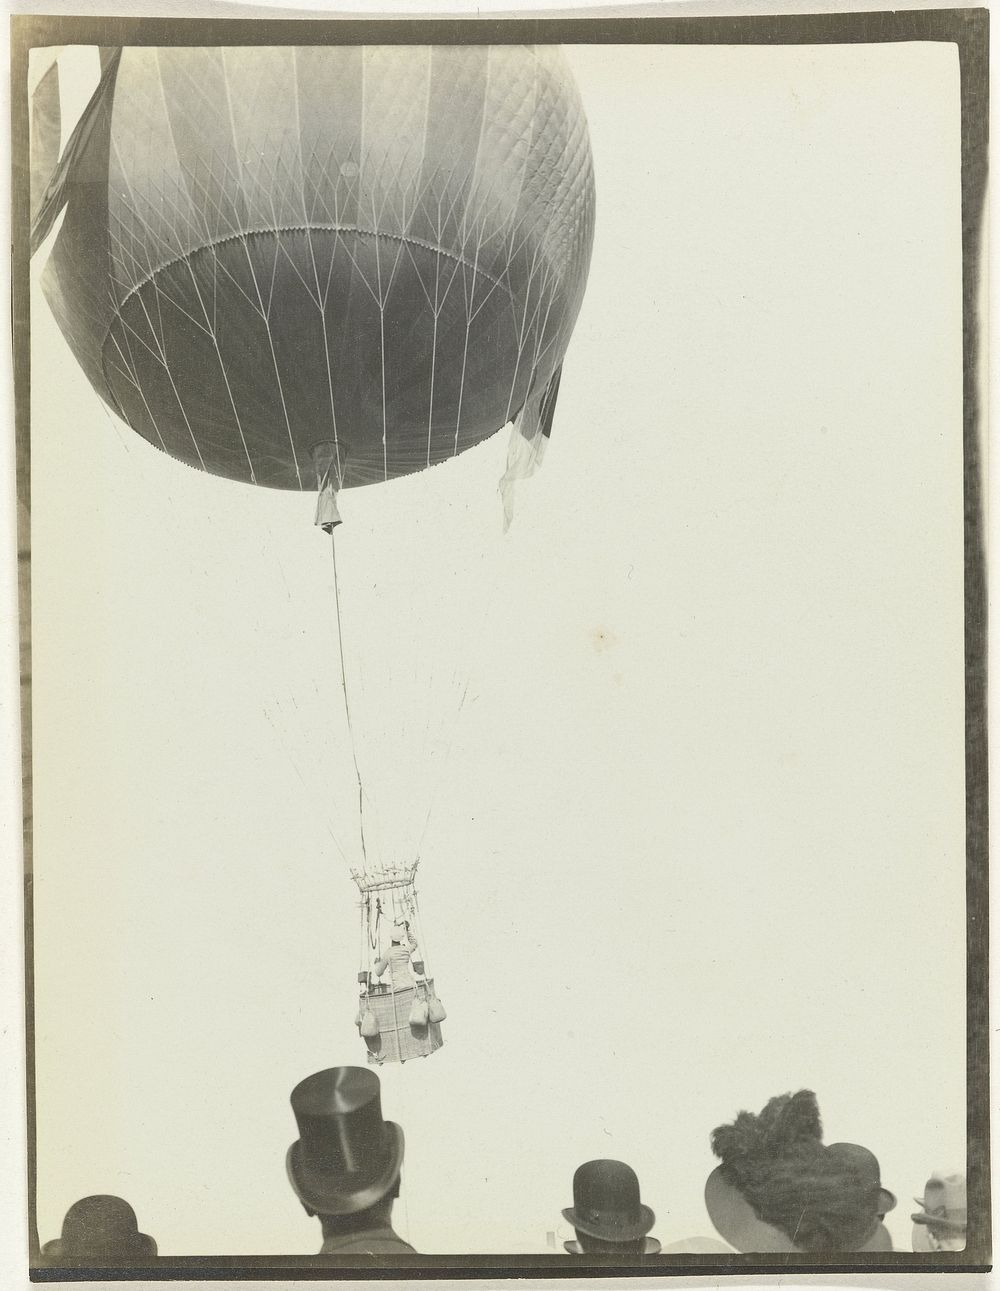 The Third Gordon Bennett Balloon Race (1908) by anonymous